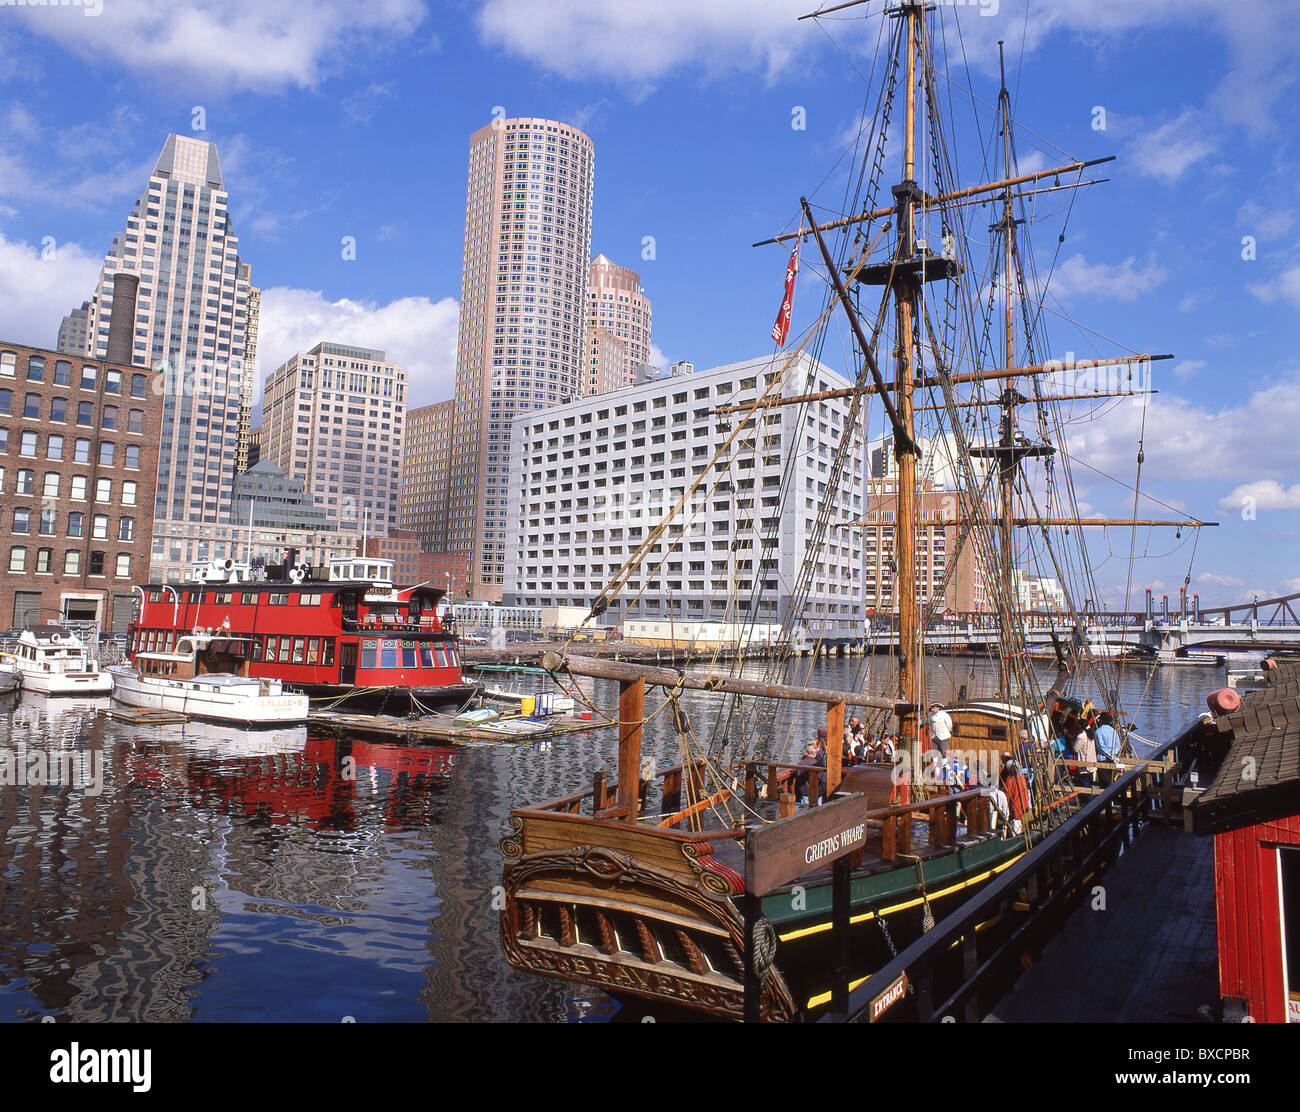 Boston Tea Party Ship, Hafen von Boston, Boston, Massachusetts, Vereinigte Staaten von Amerika Stockfoto